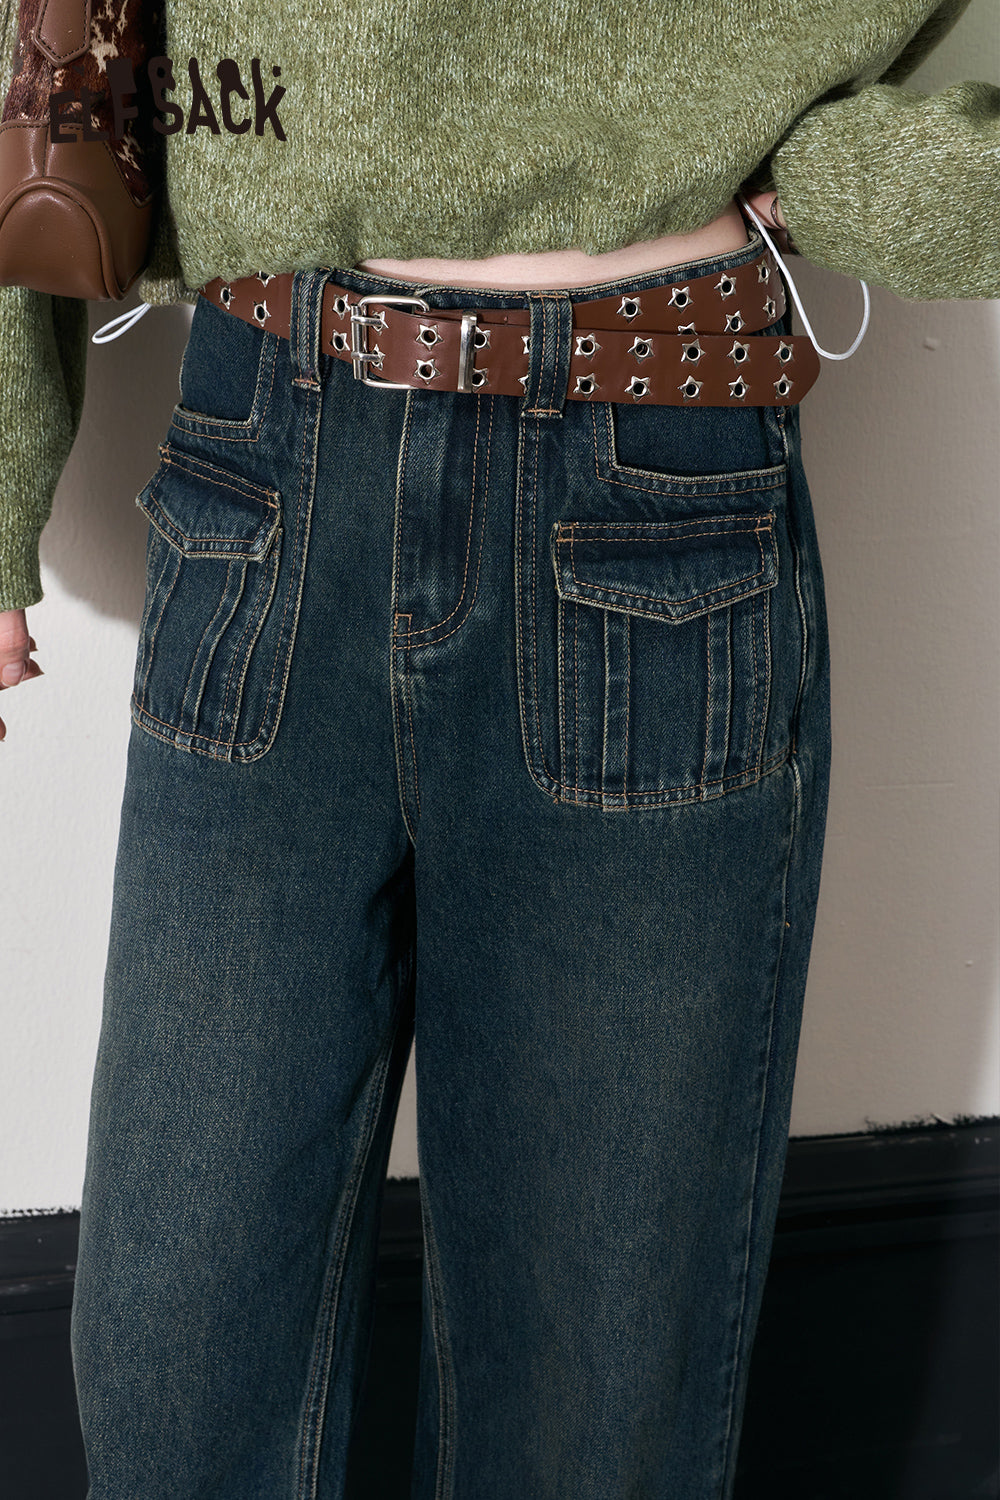 
                  
                    ELFSACK Free Belt Straight Baggy Jeans Women 2023 Winter High Waist Korean Fashion Trousers
                  
                